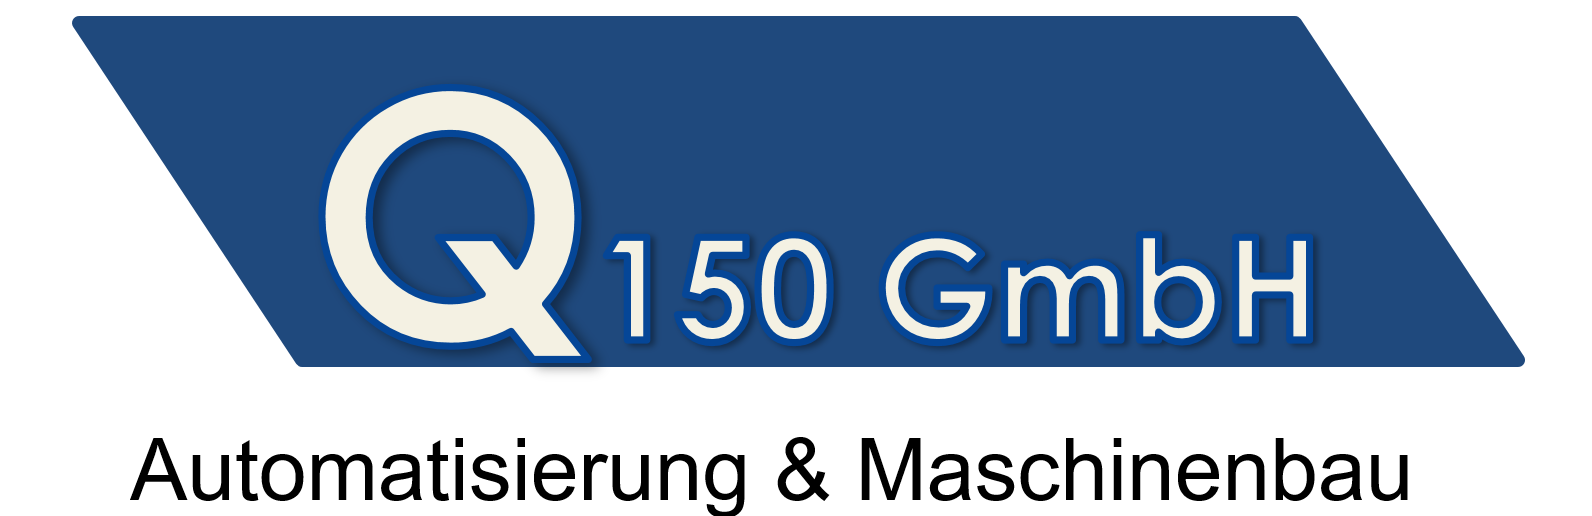 Q150 GmbH